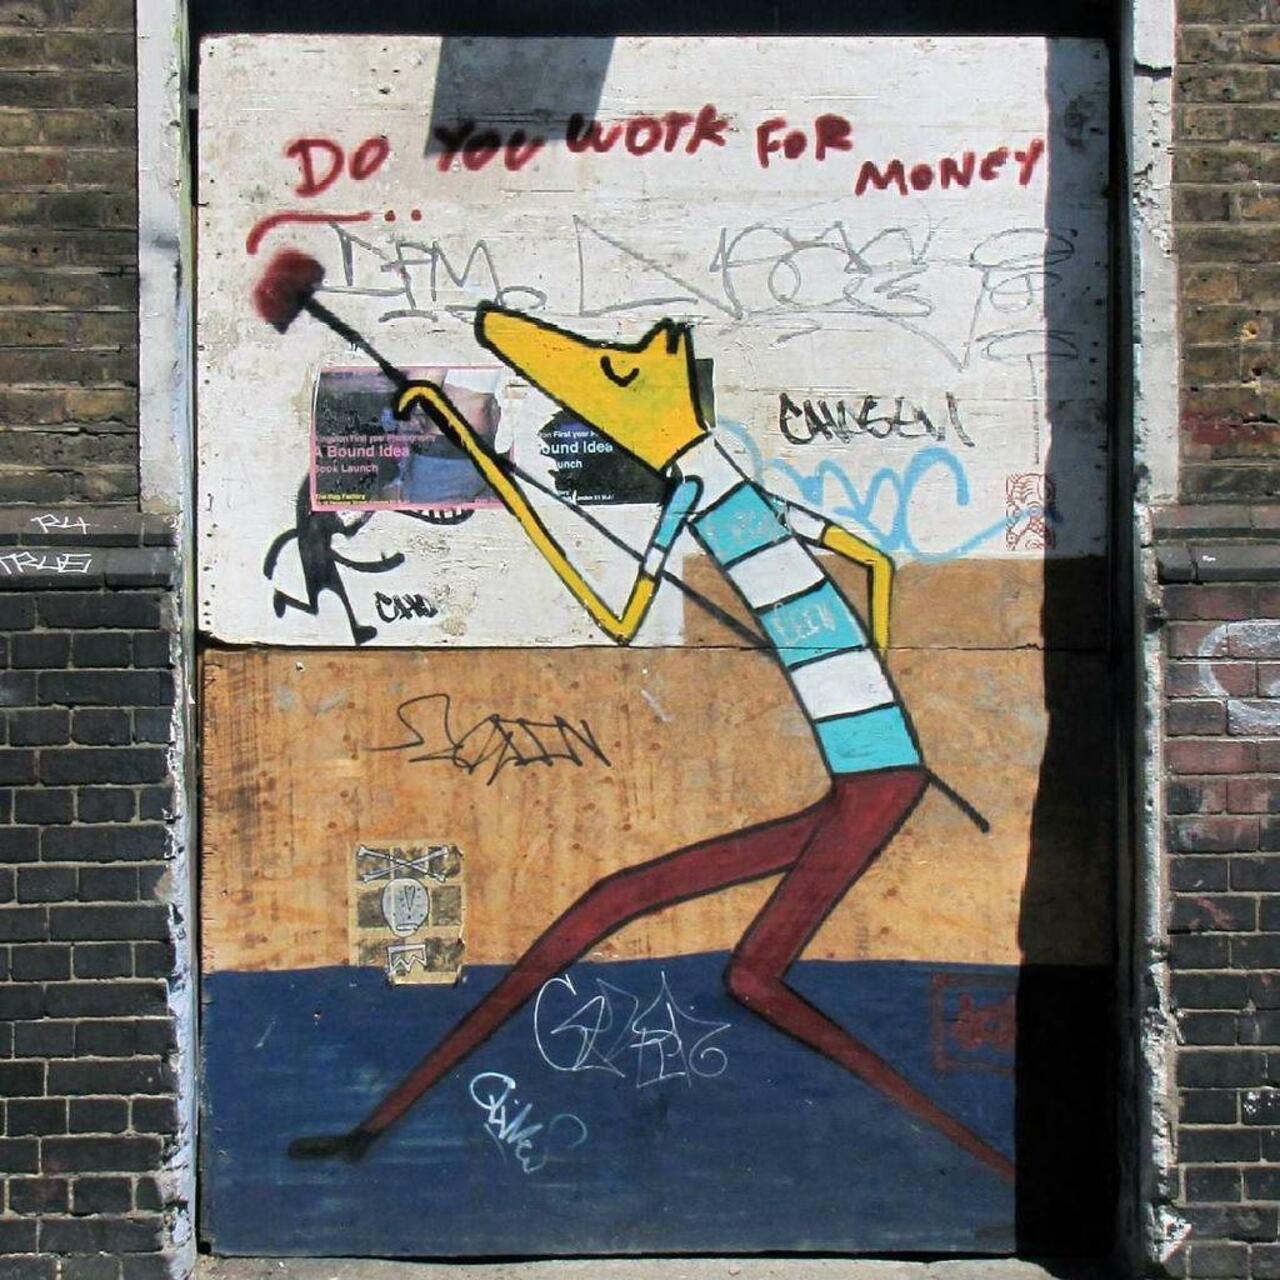 #streetart #graffiti #shoreditch #london #wallart #urbanart #bricklane #spraycan #spraycanart #art #street #selor #… http://t.co/WbicX3mok9